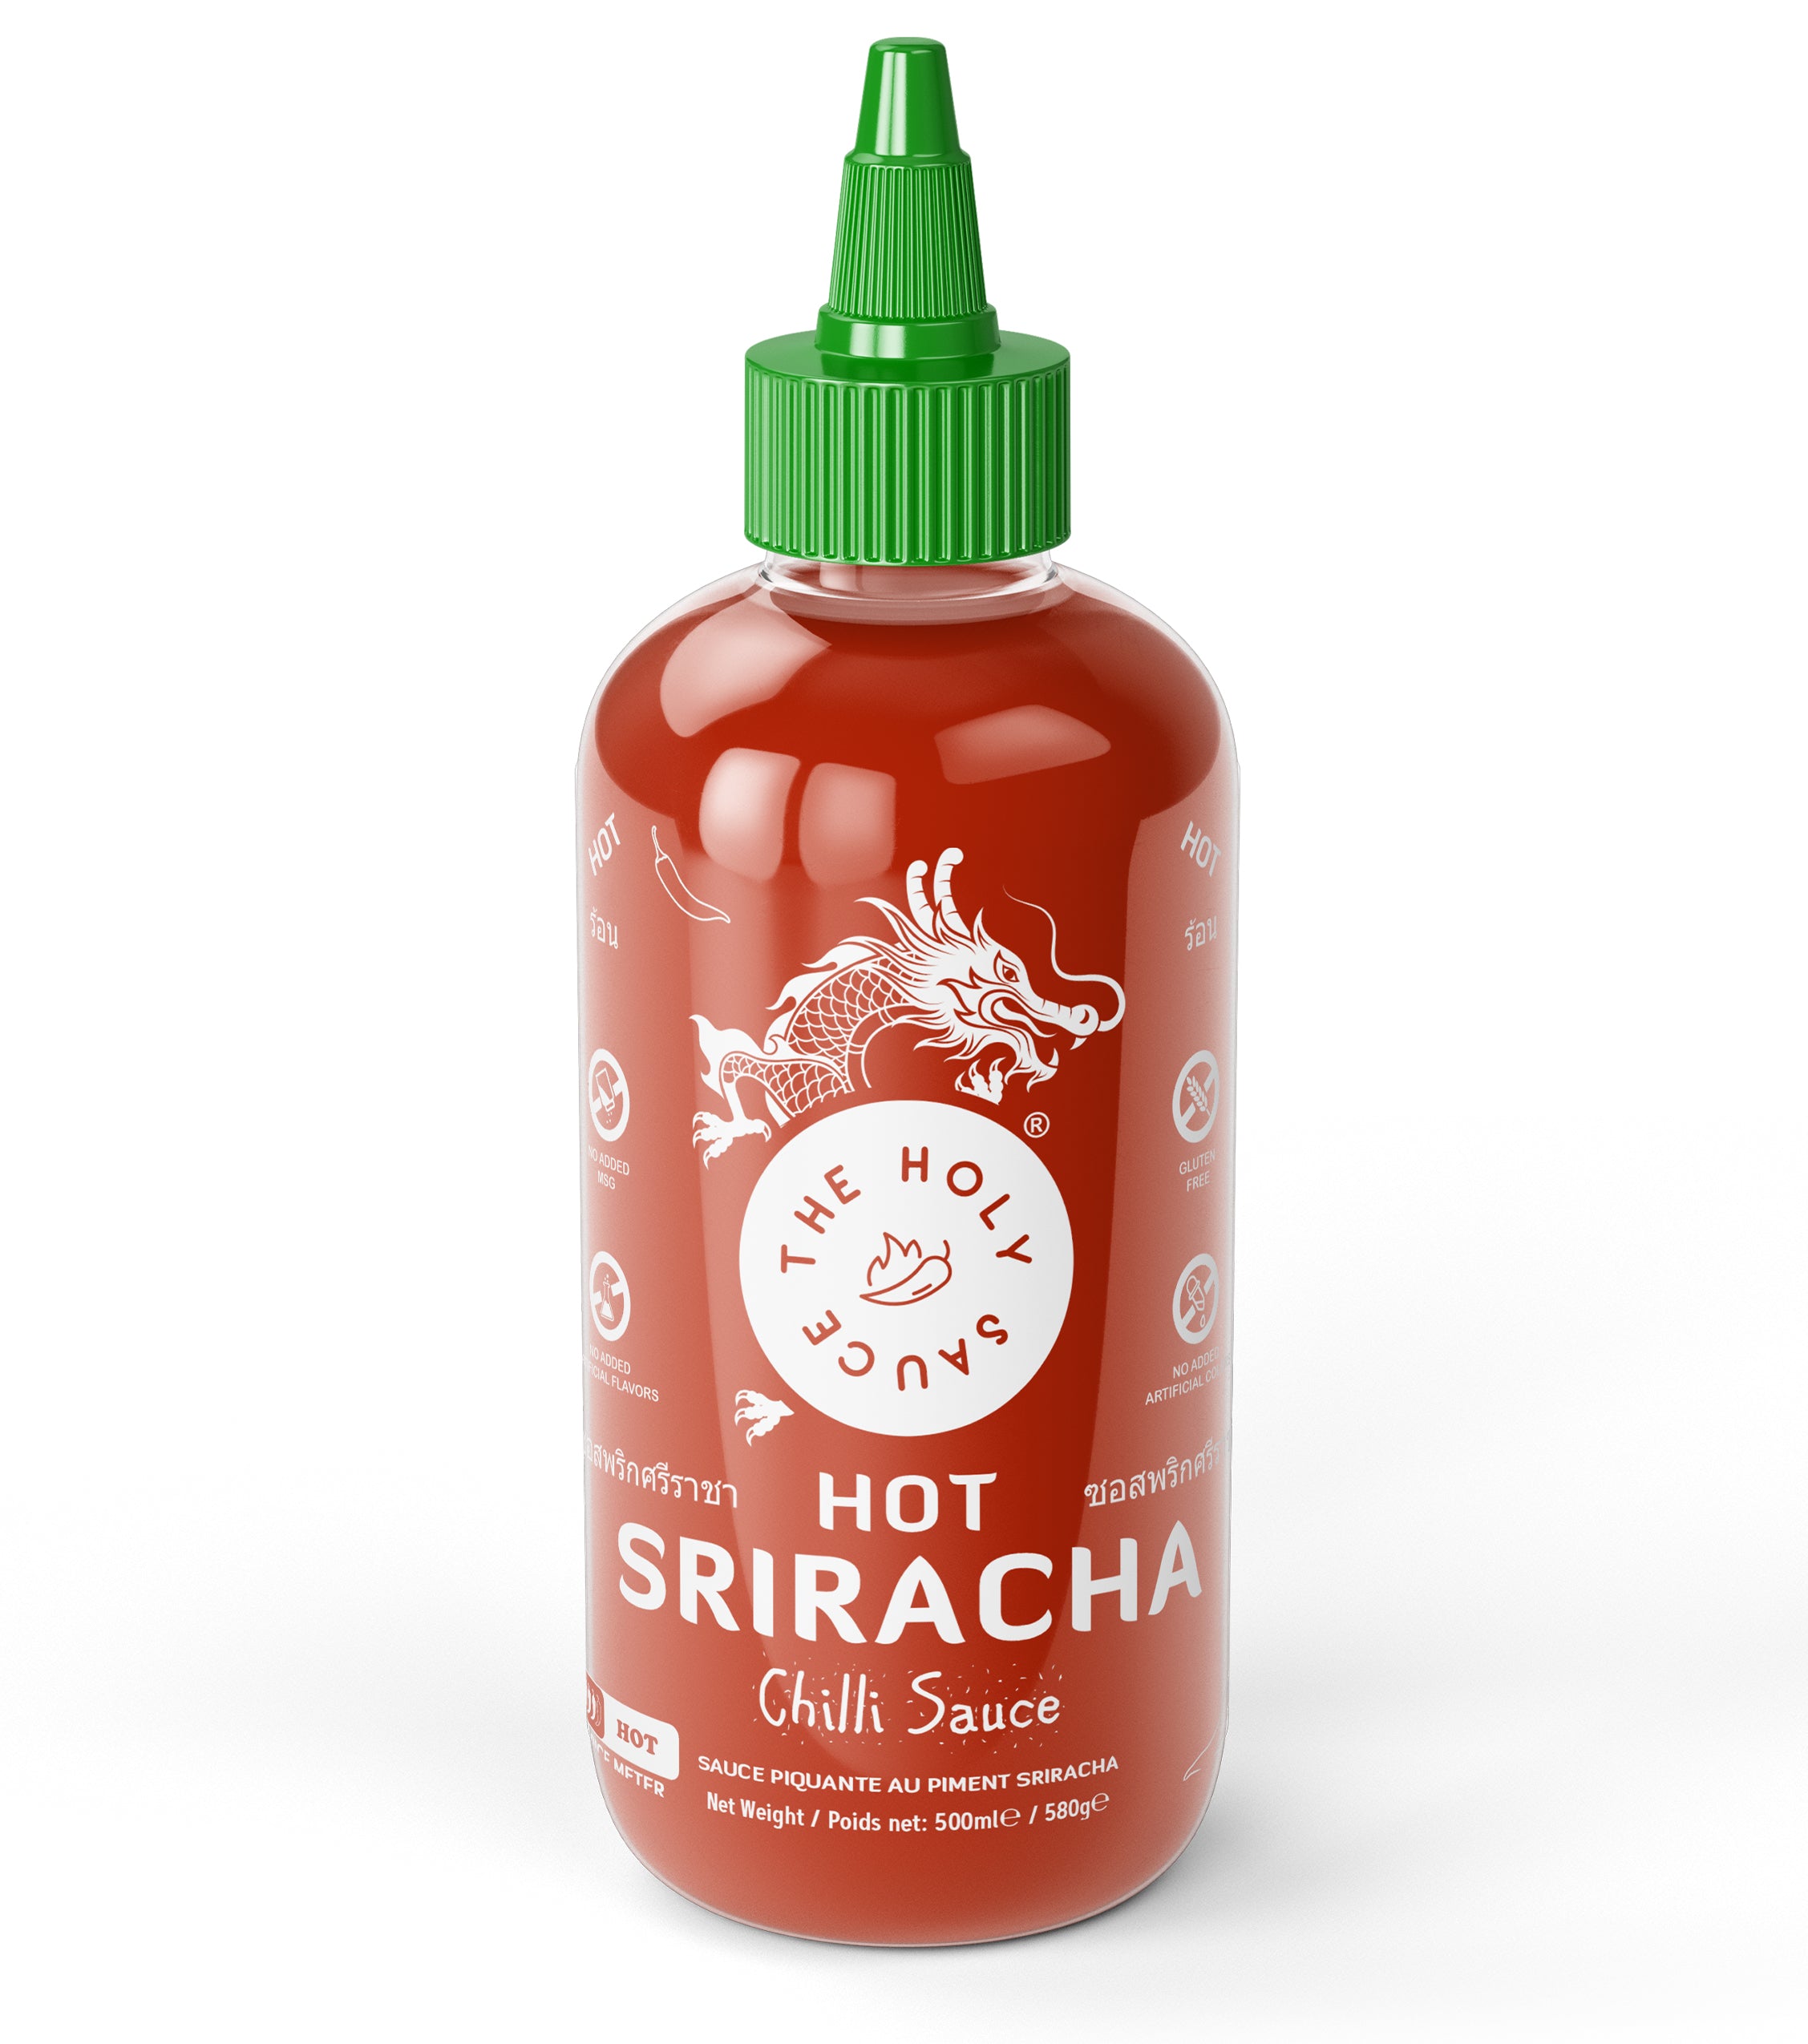 HOLY SAUCE Sriracha Chili Sauce Hot 580g